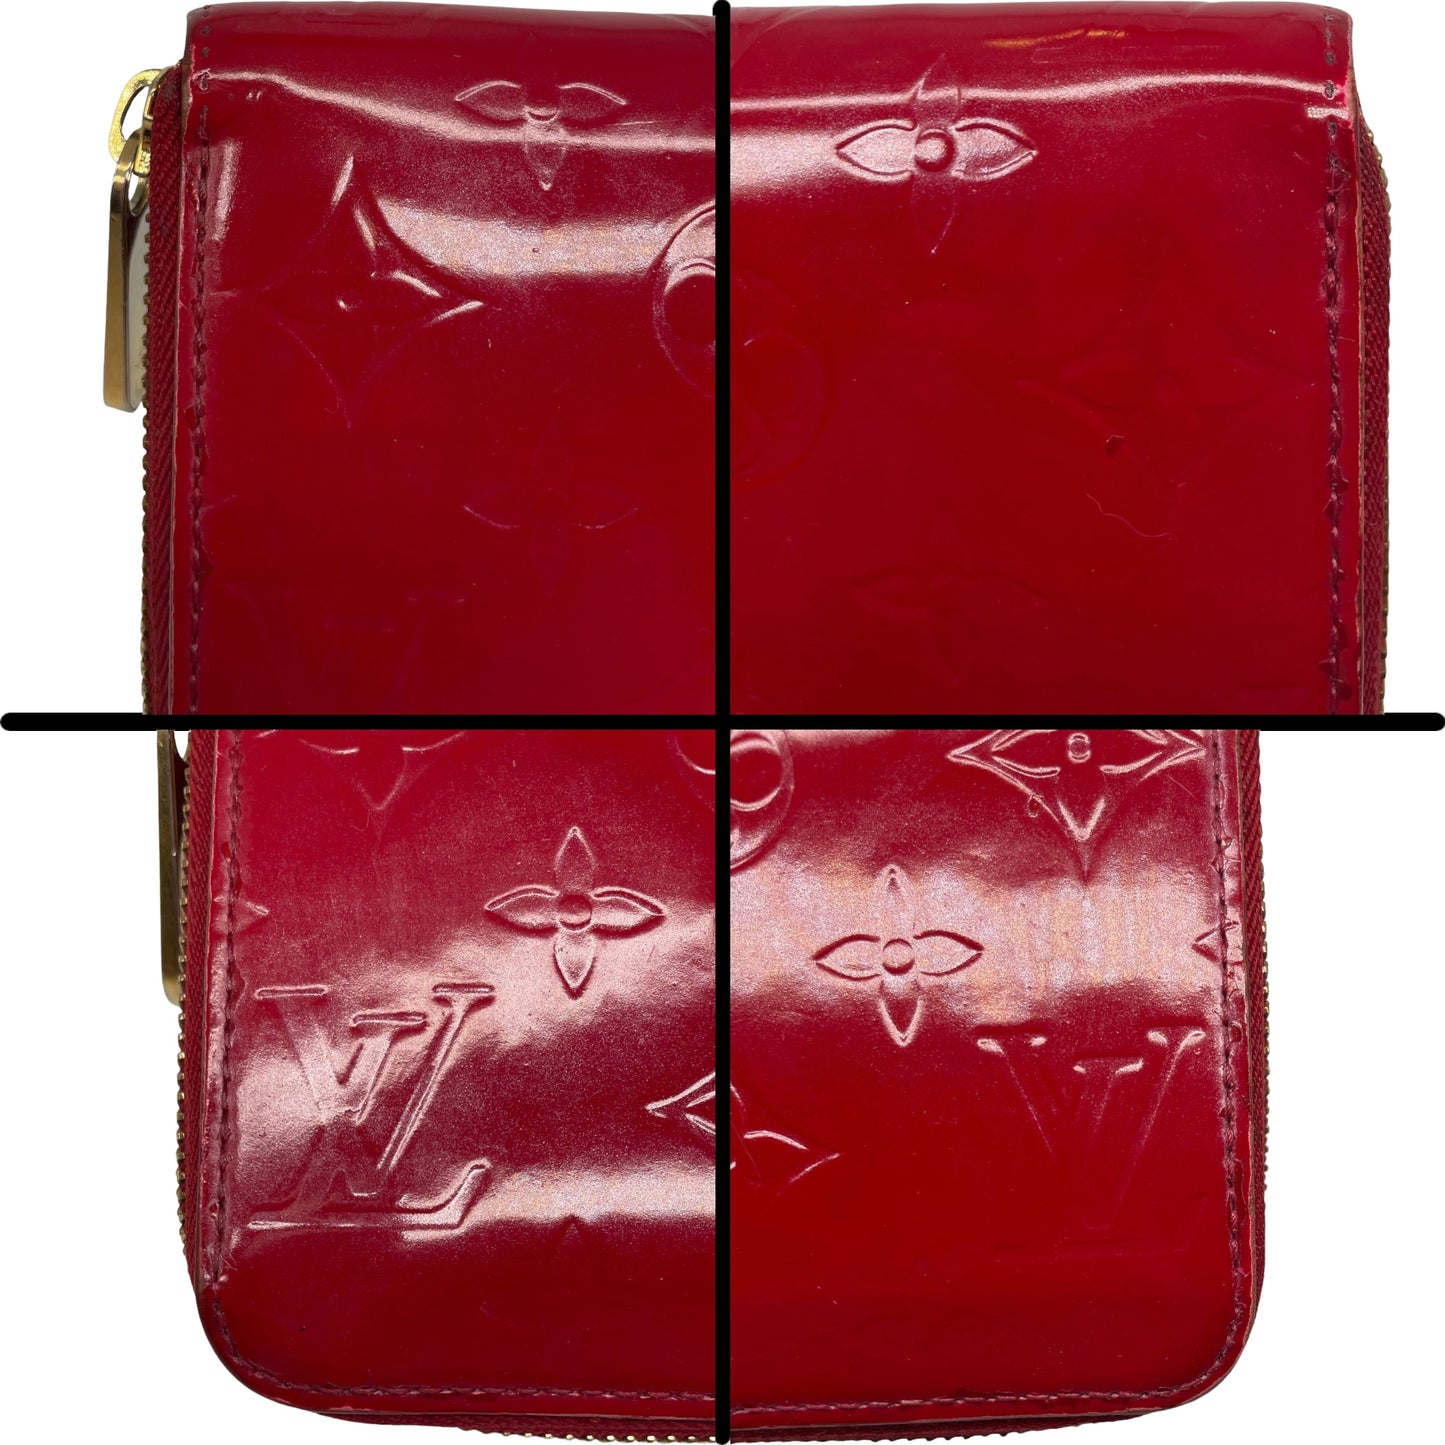 Zippy MV Wallet in Monogram Vernis leather, Gold Hardware